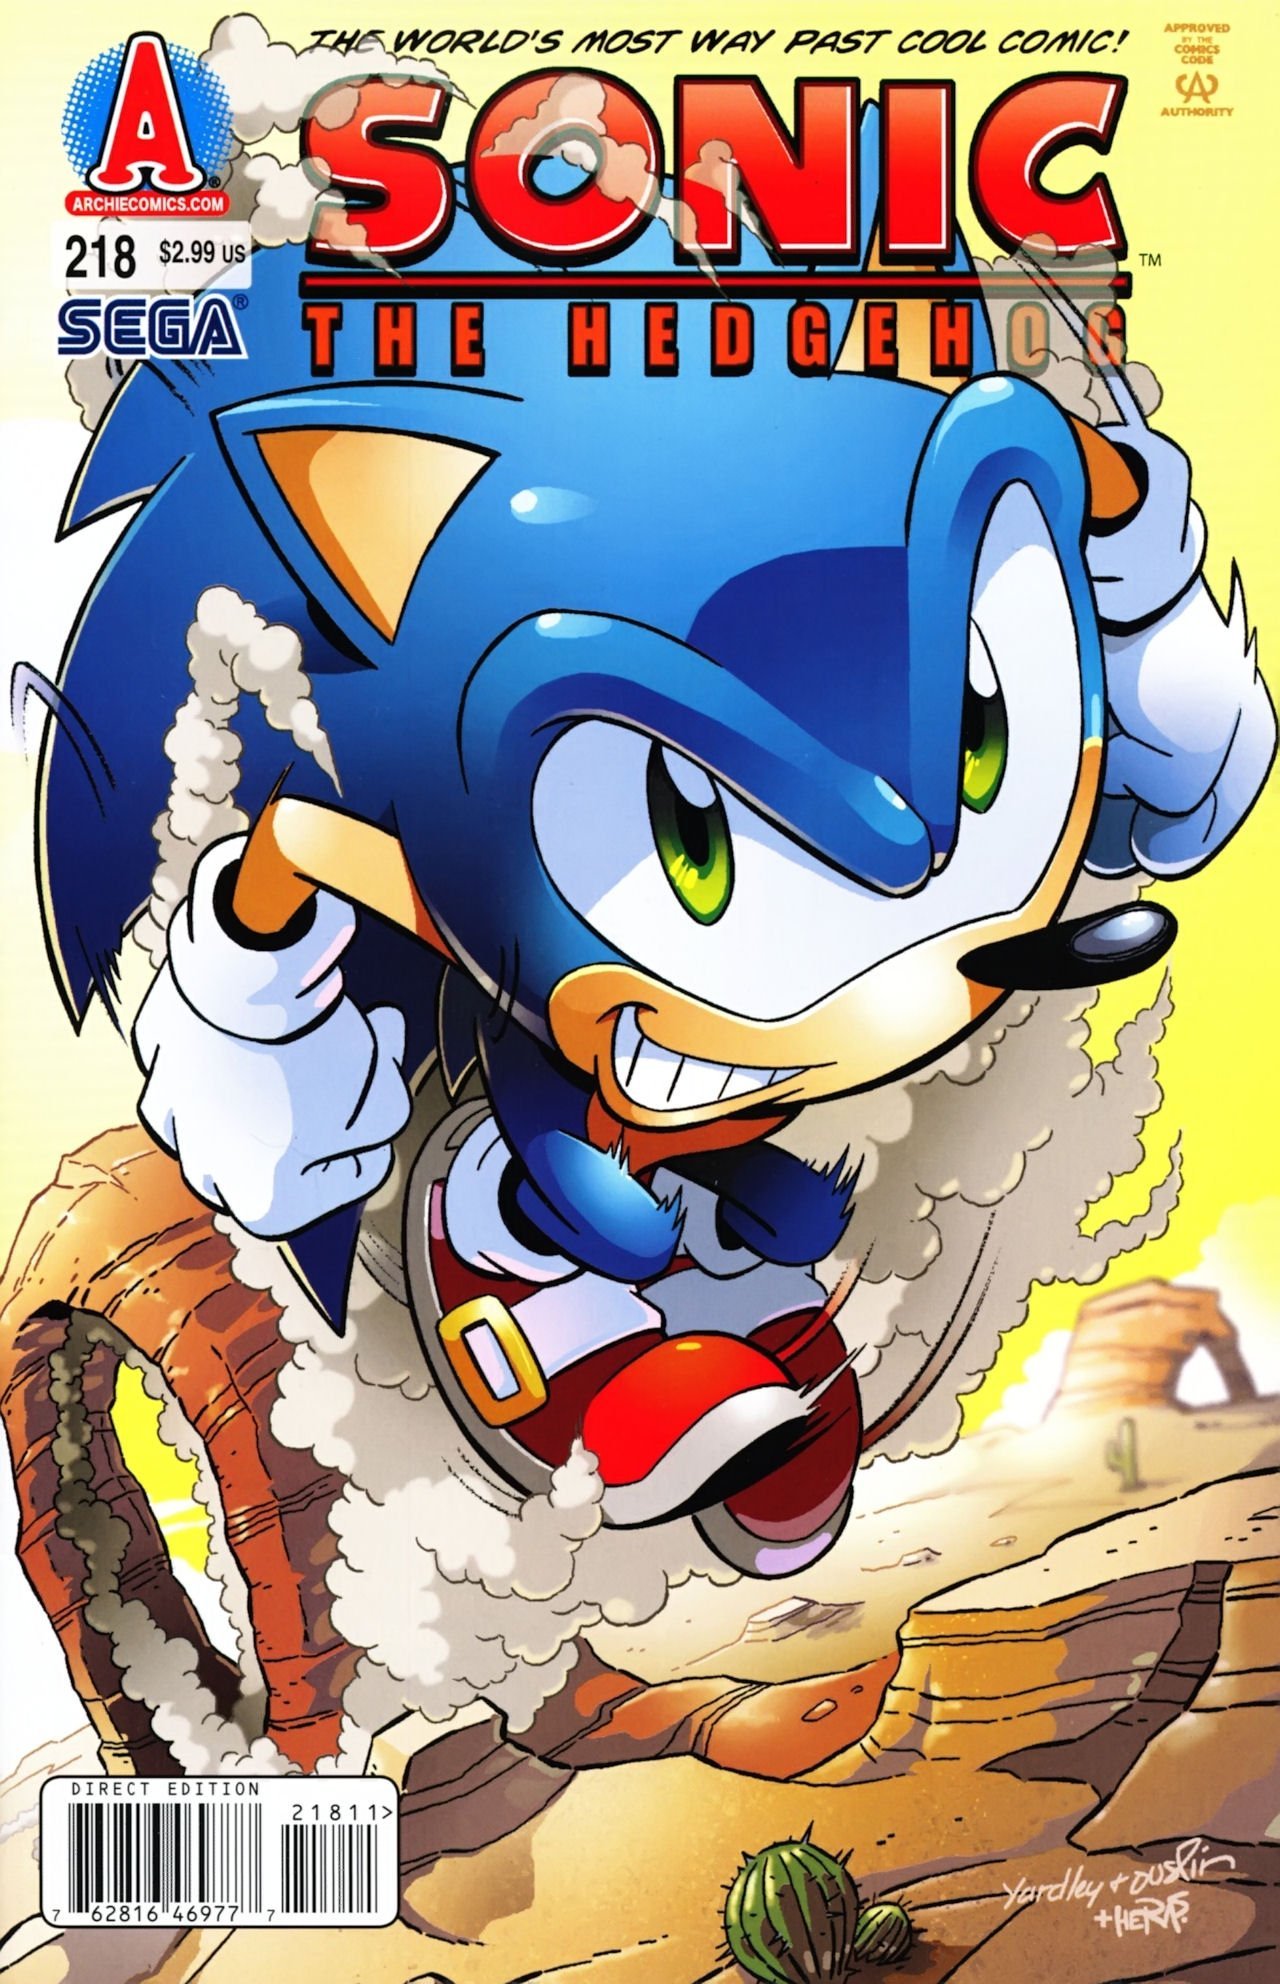 Sonic the Hedgehog 218 (December 2010)